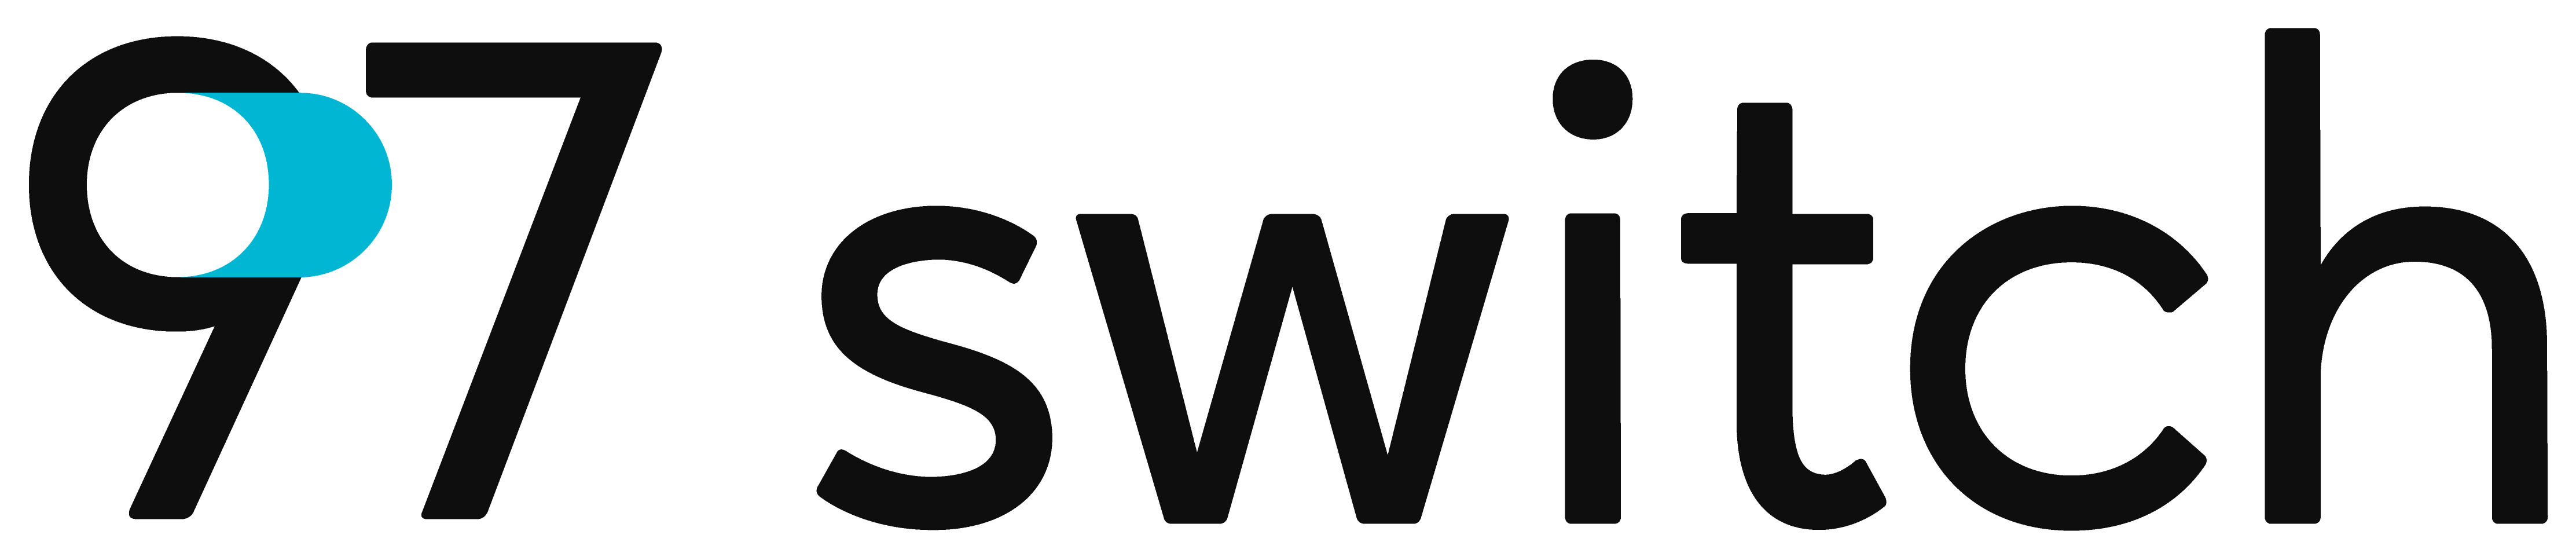 Best BigCommerce Development Firm Logo: 97 Switch